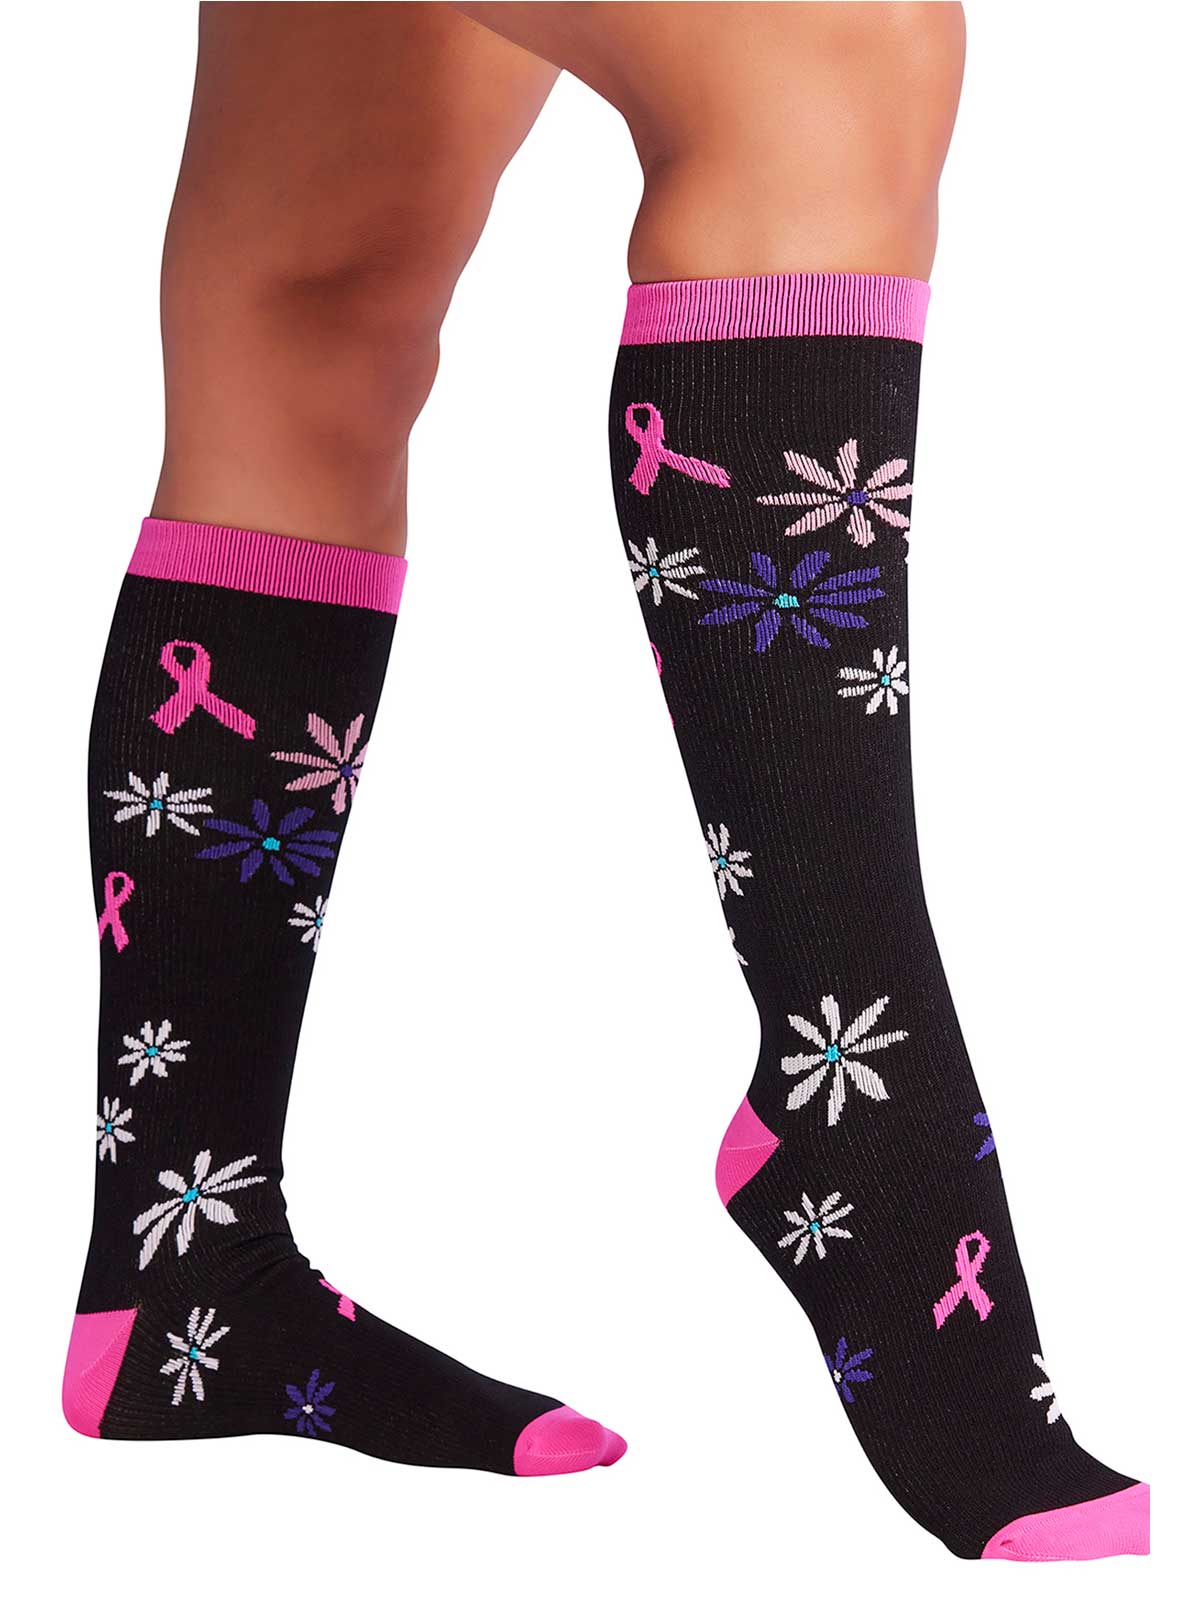 Women's compression socks, Stockings & Hosiery